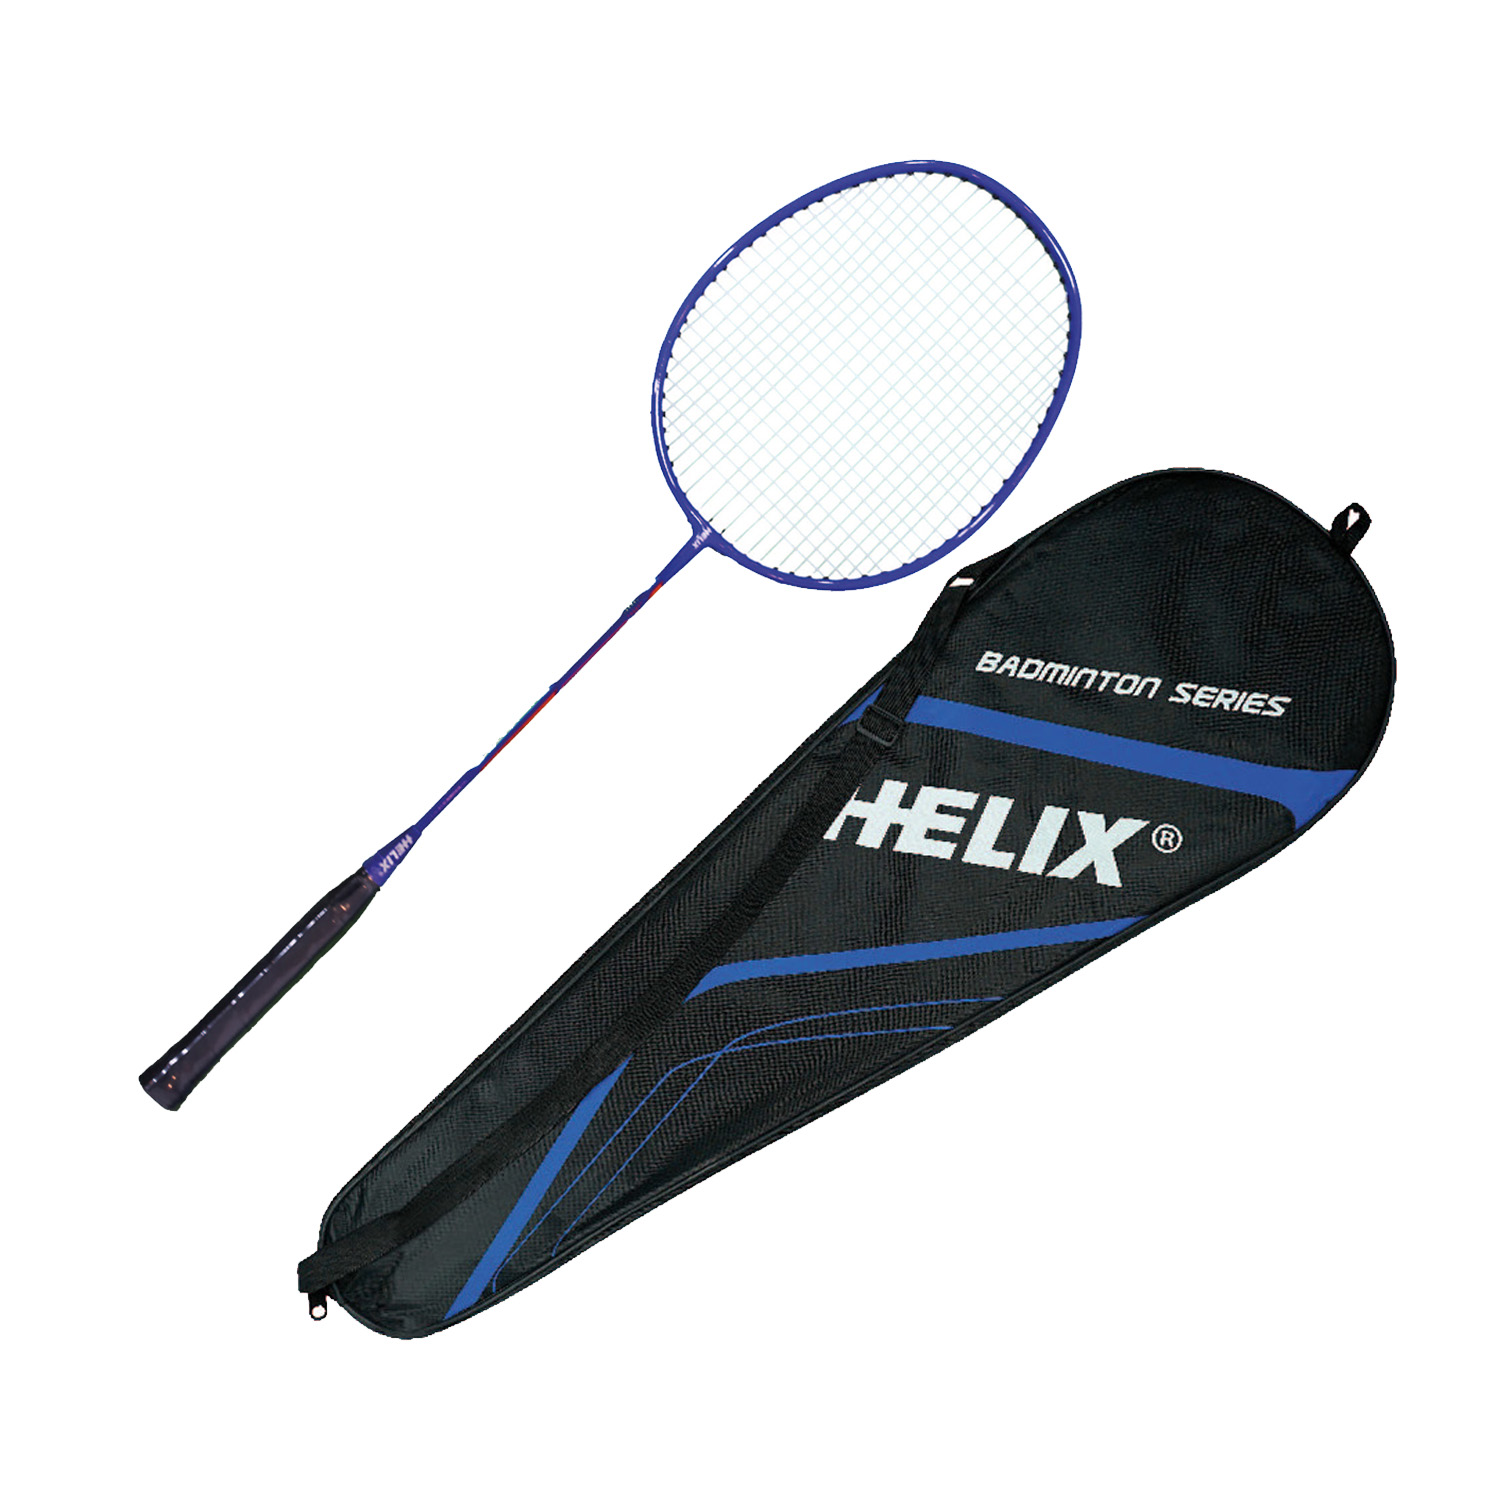 Helix Astrox99 Badminton Racket - Blue